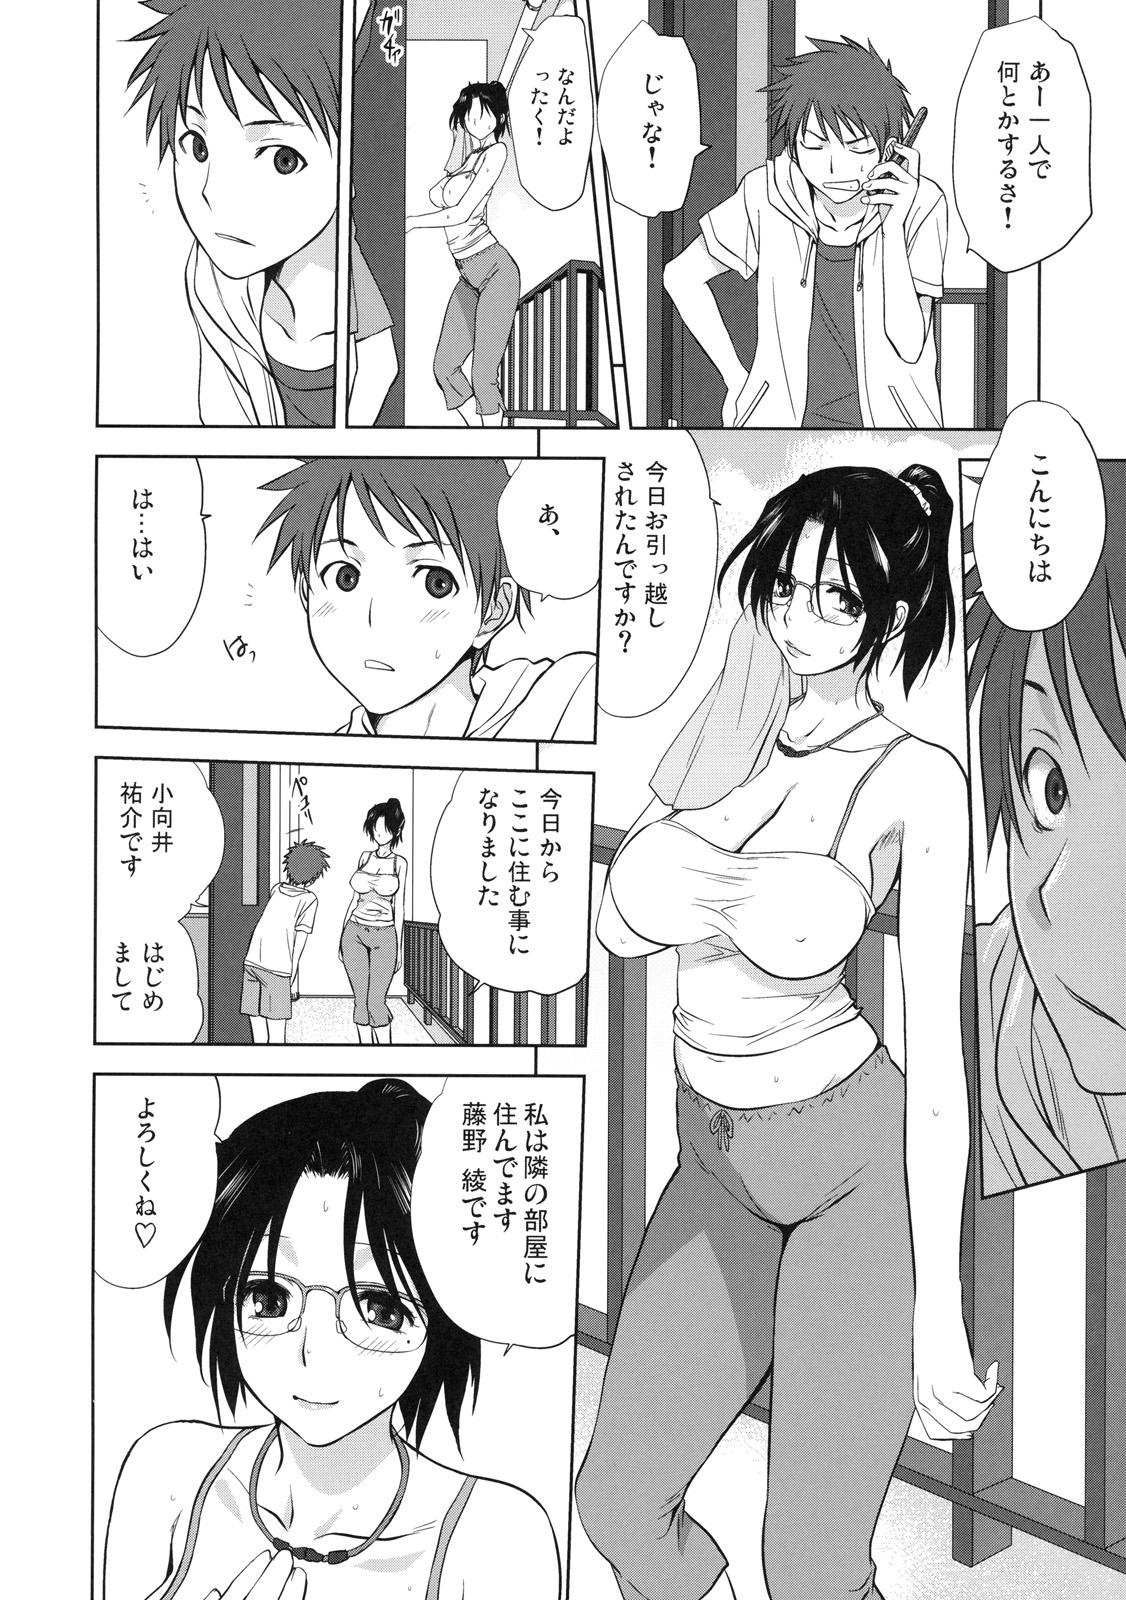 Two Shinzui Shinseikatsu Ver. Vol. 4 Club - Page 7